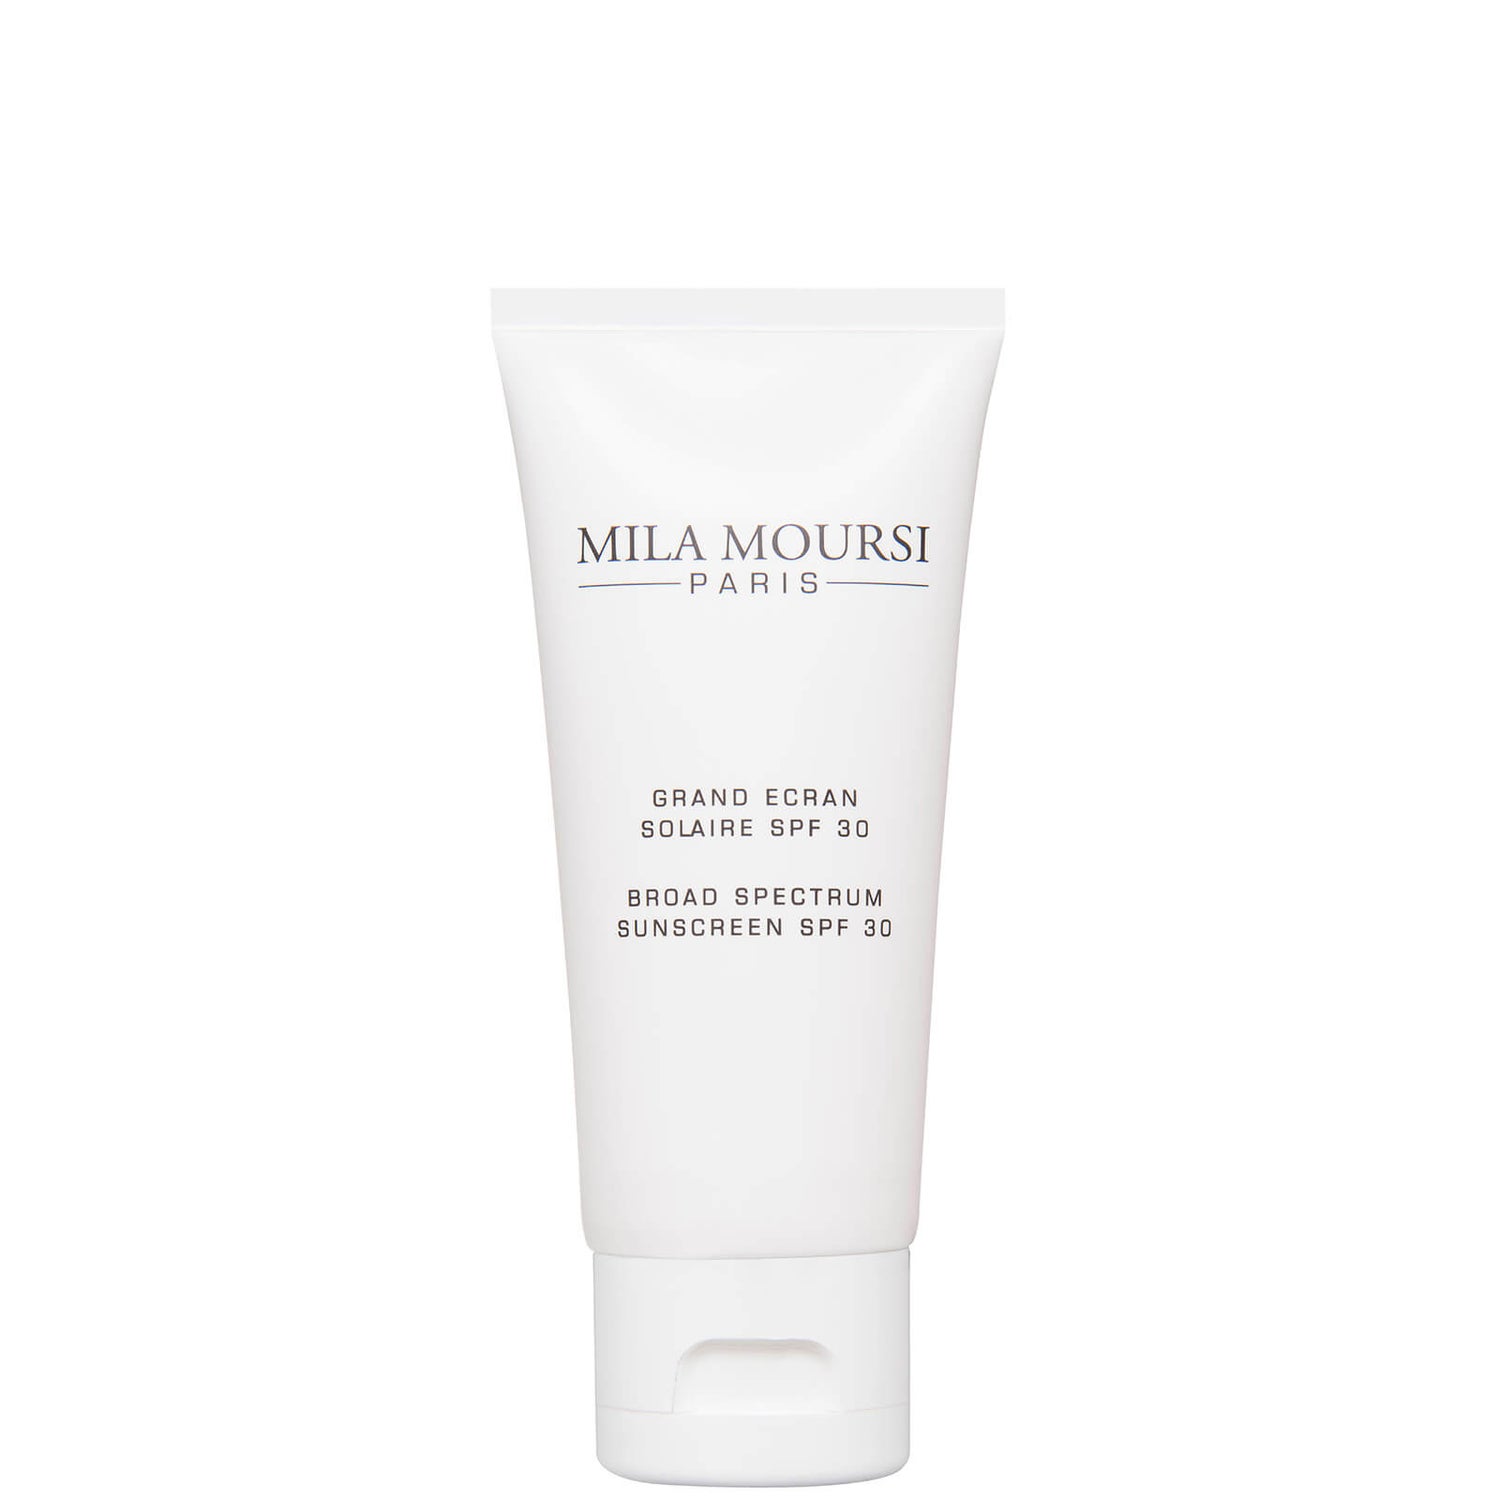 Mila Moursi Broad Spectrum SPF30 Sunscreen 1.7 fl. oz